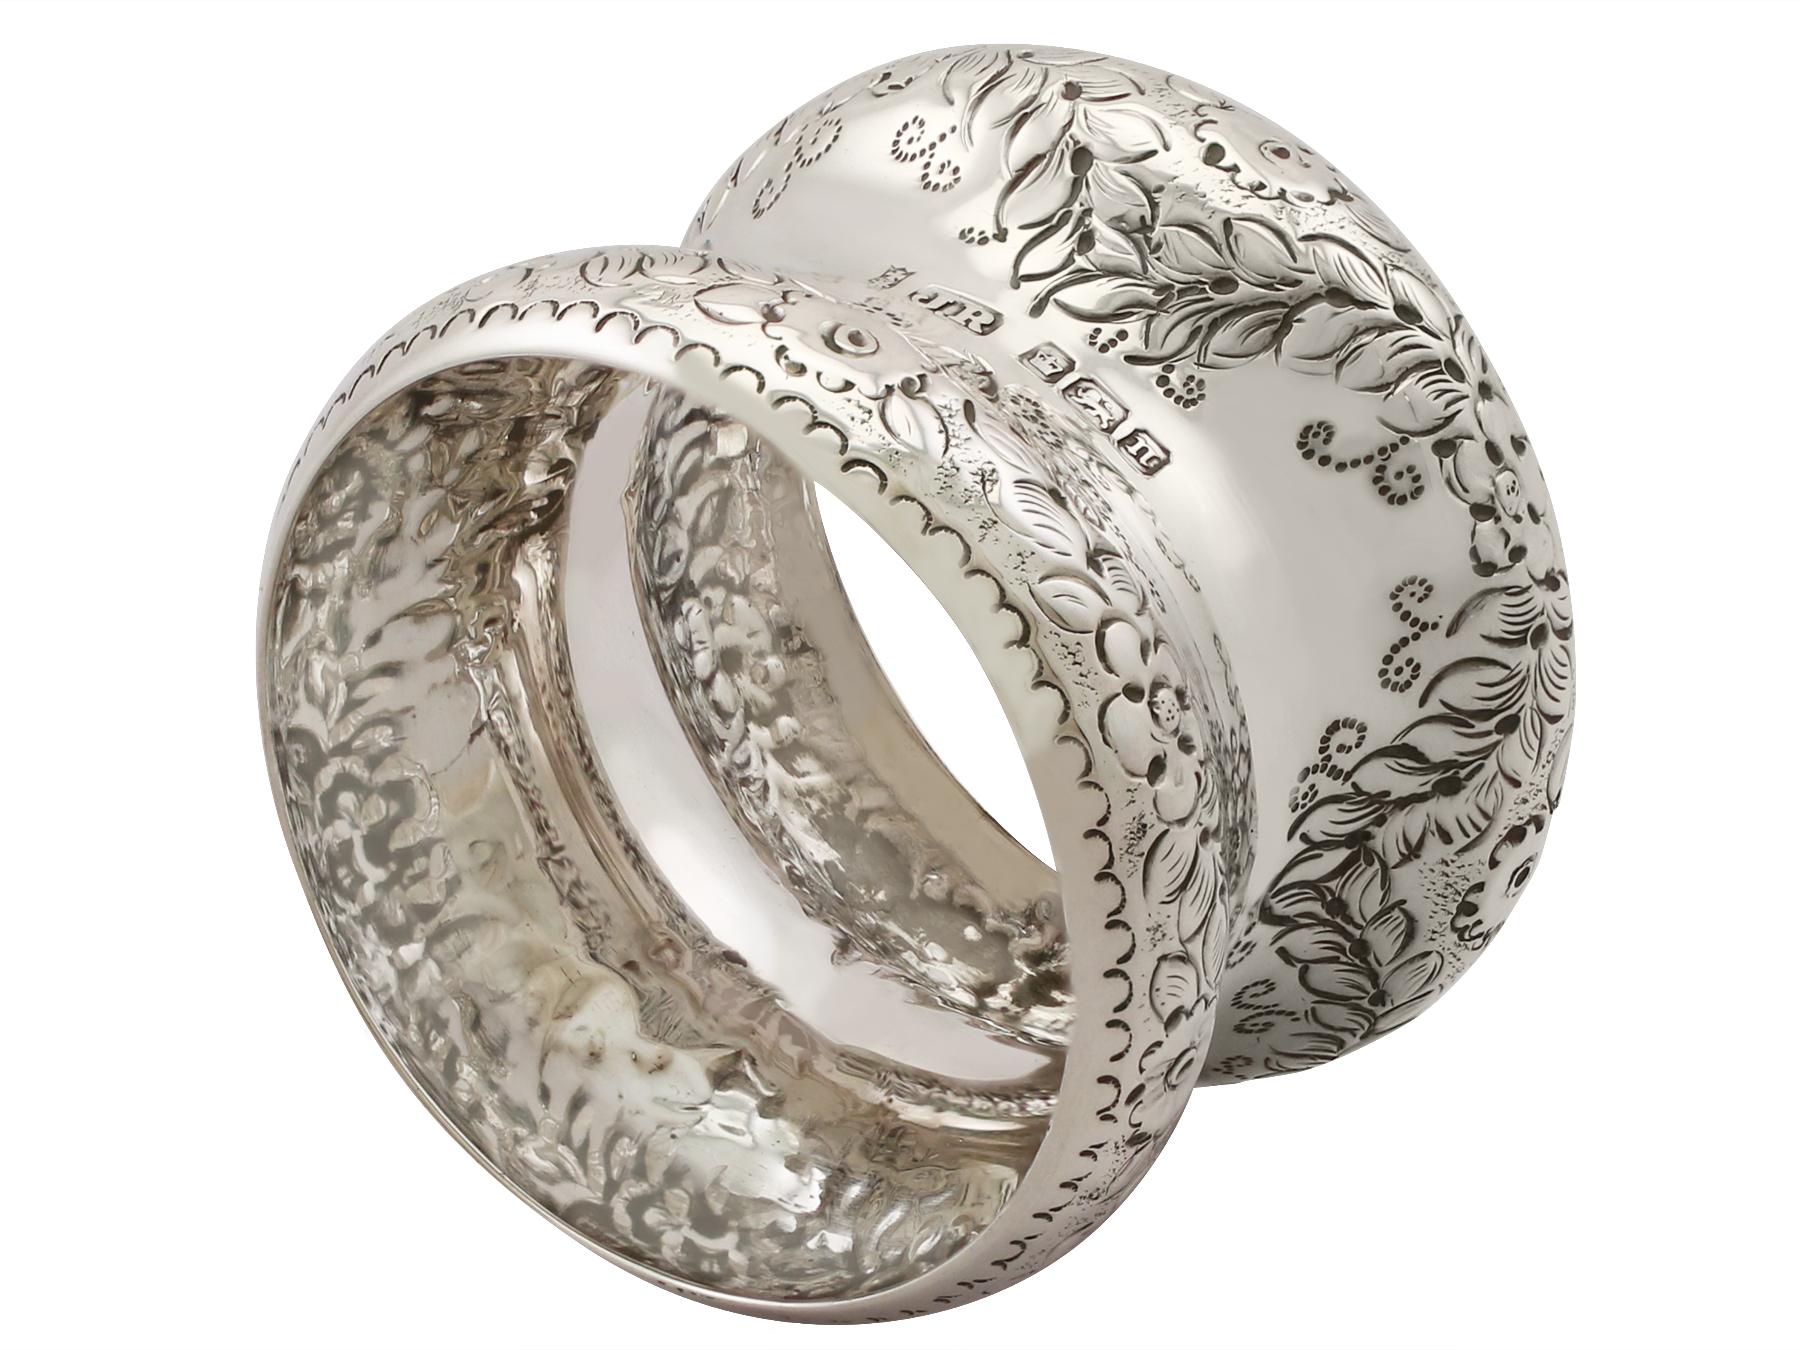 Antique Edwardian Sterling Silver Napkin Rings 2